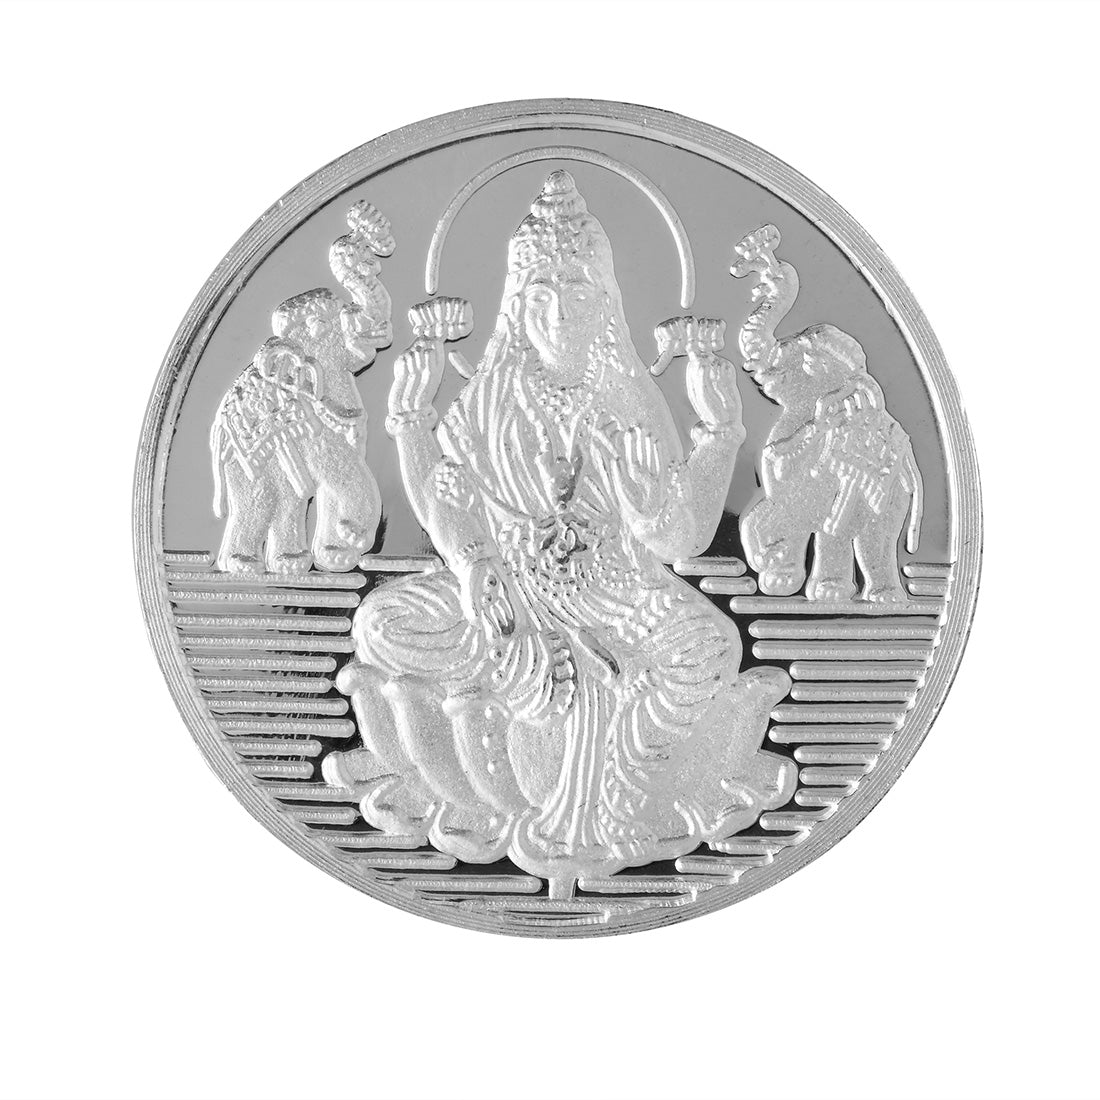 10 gm laxmi silver coin